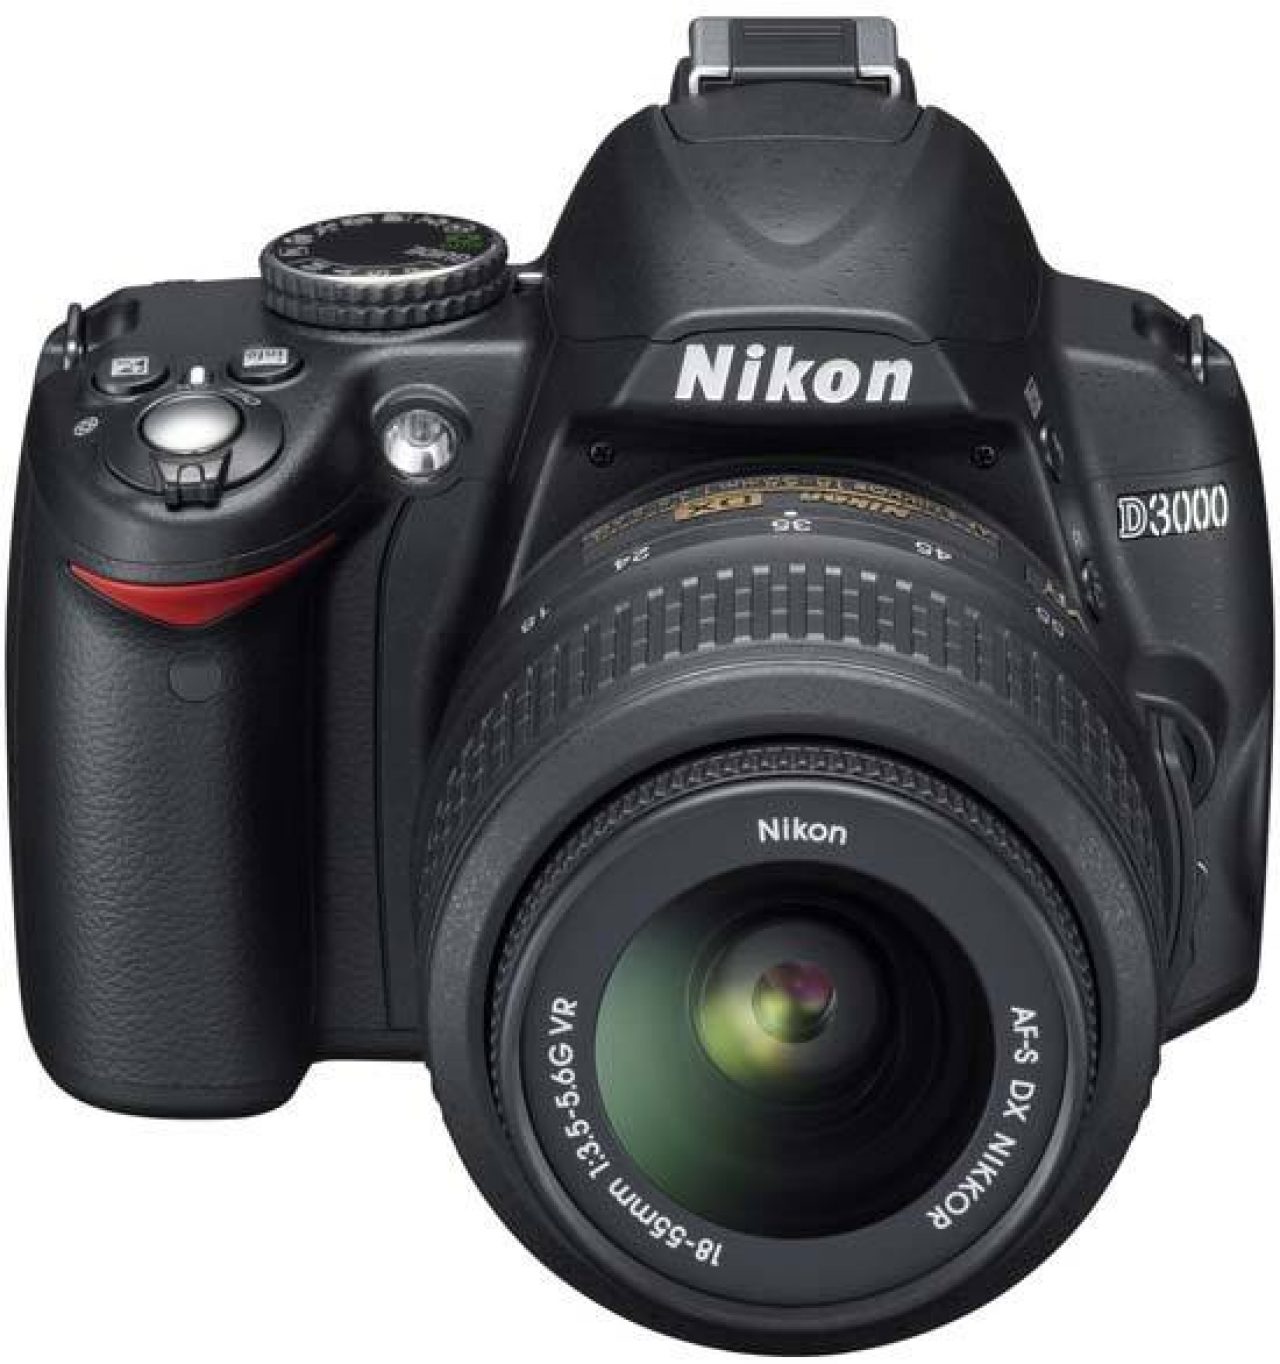 Nikon D3000 Review | Photography Blog